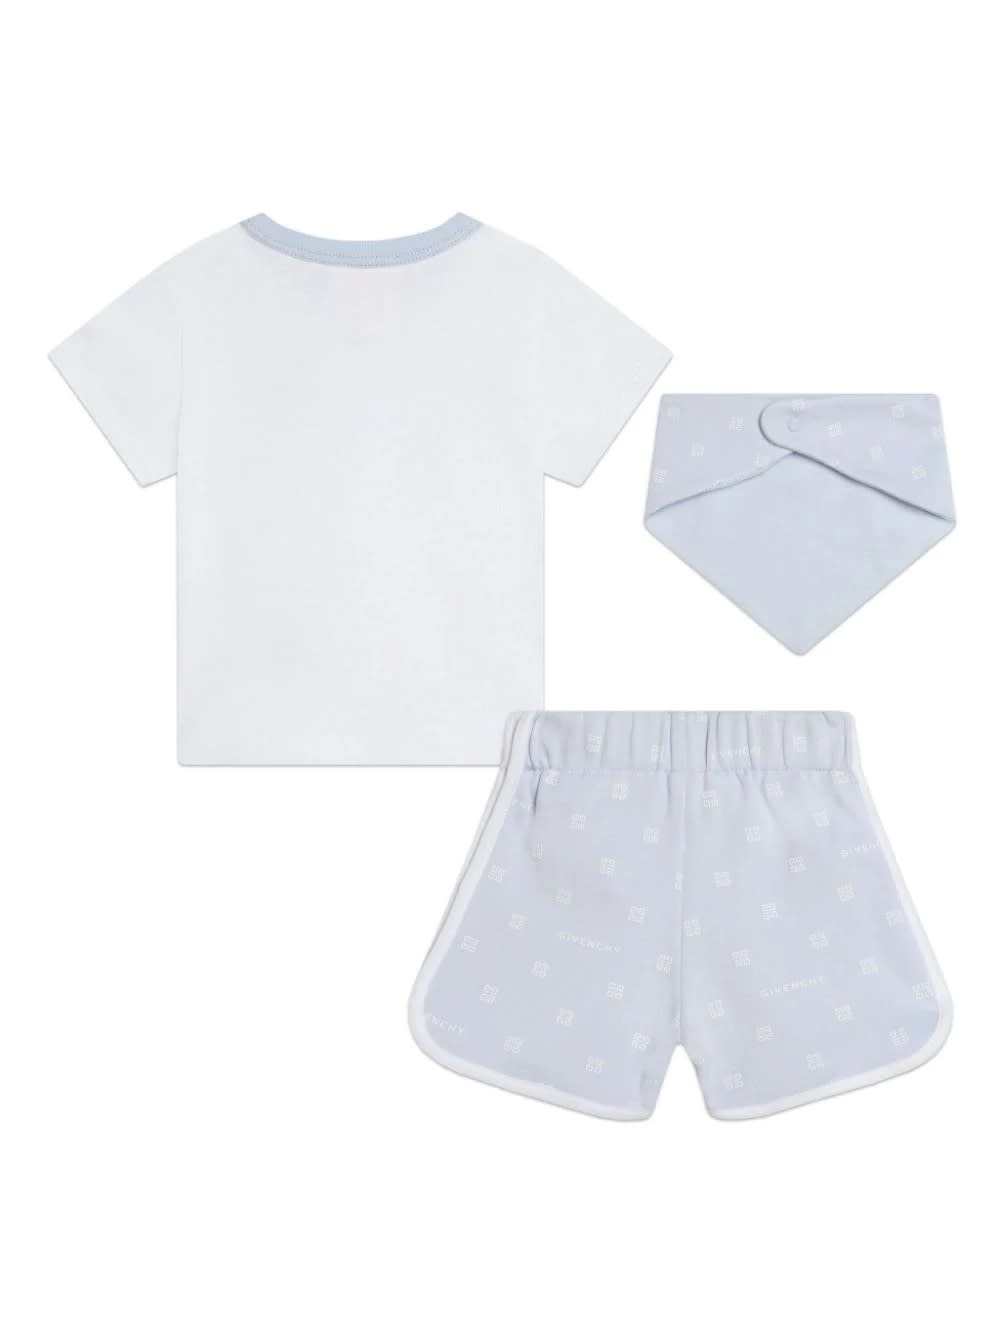 Shop Givenchy White And Light Blue Set With T-shirt, Shorts And Bandana